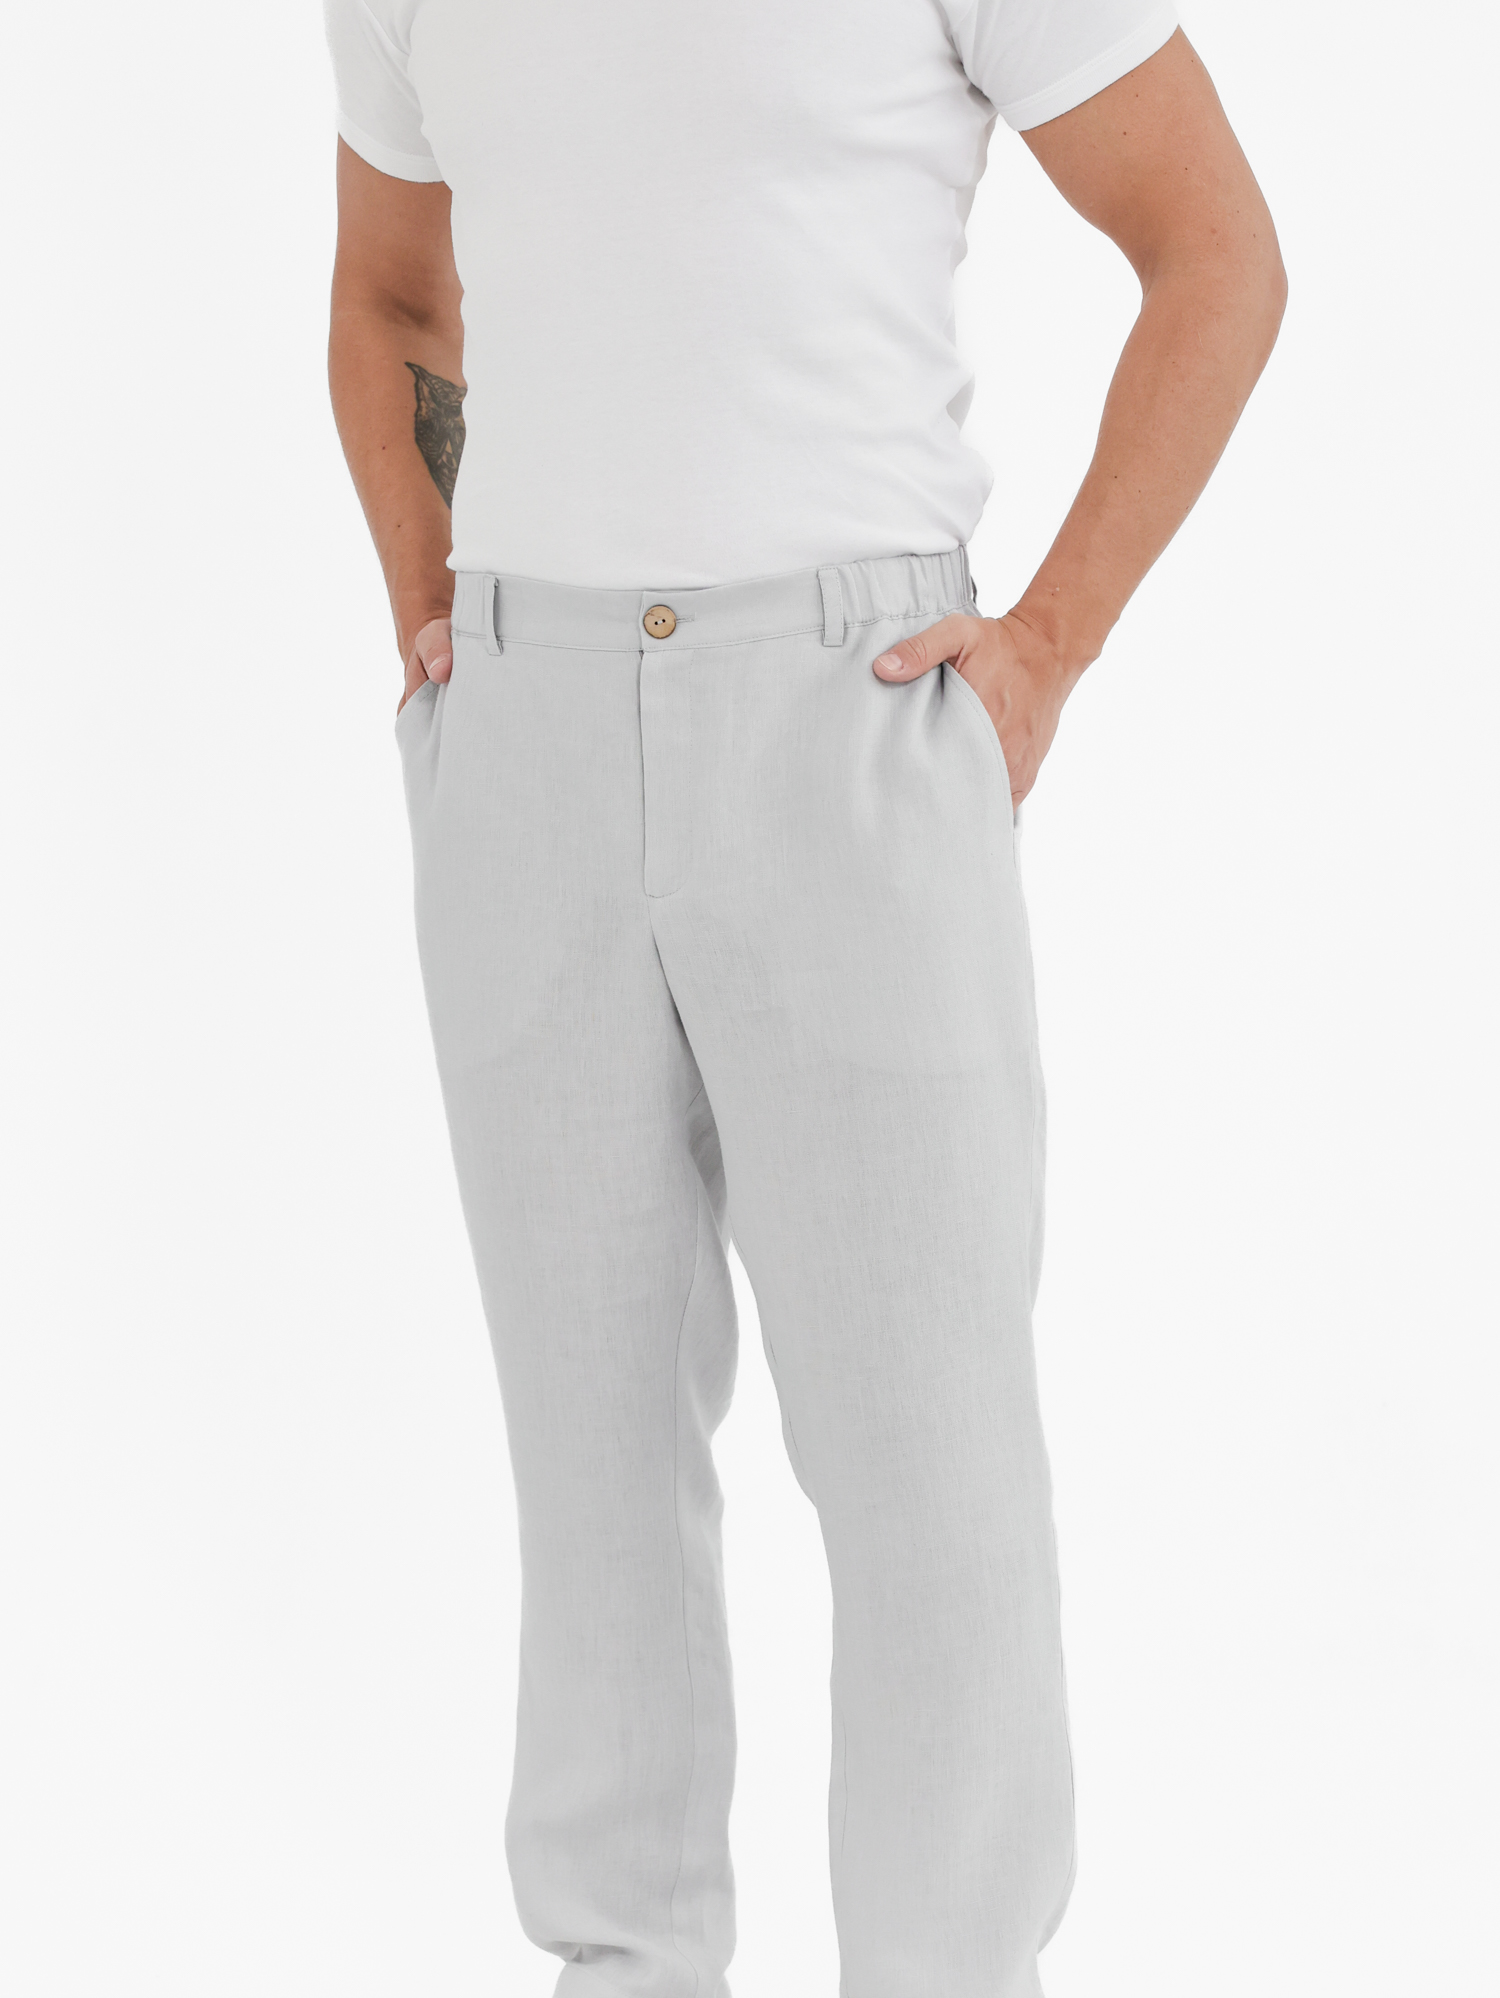 Men's long linen trousers